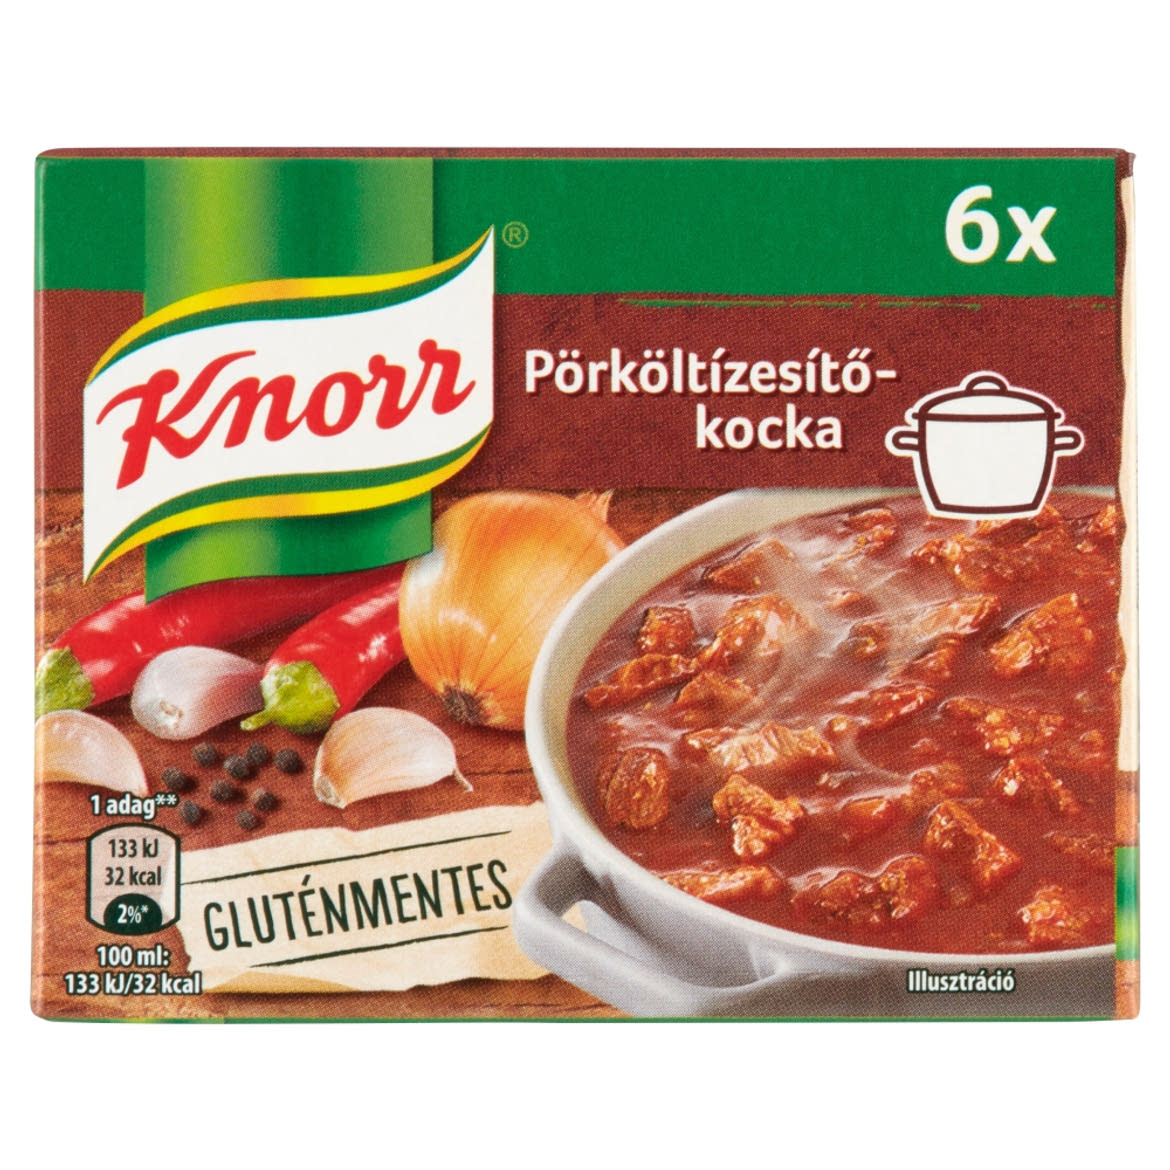 Knorr pörköltízesítő-kocka 6 x